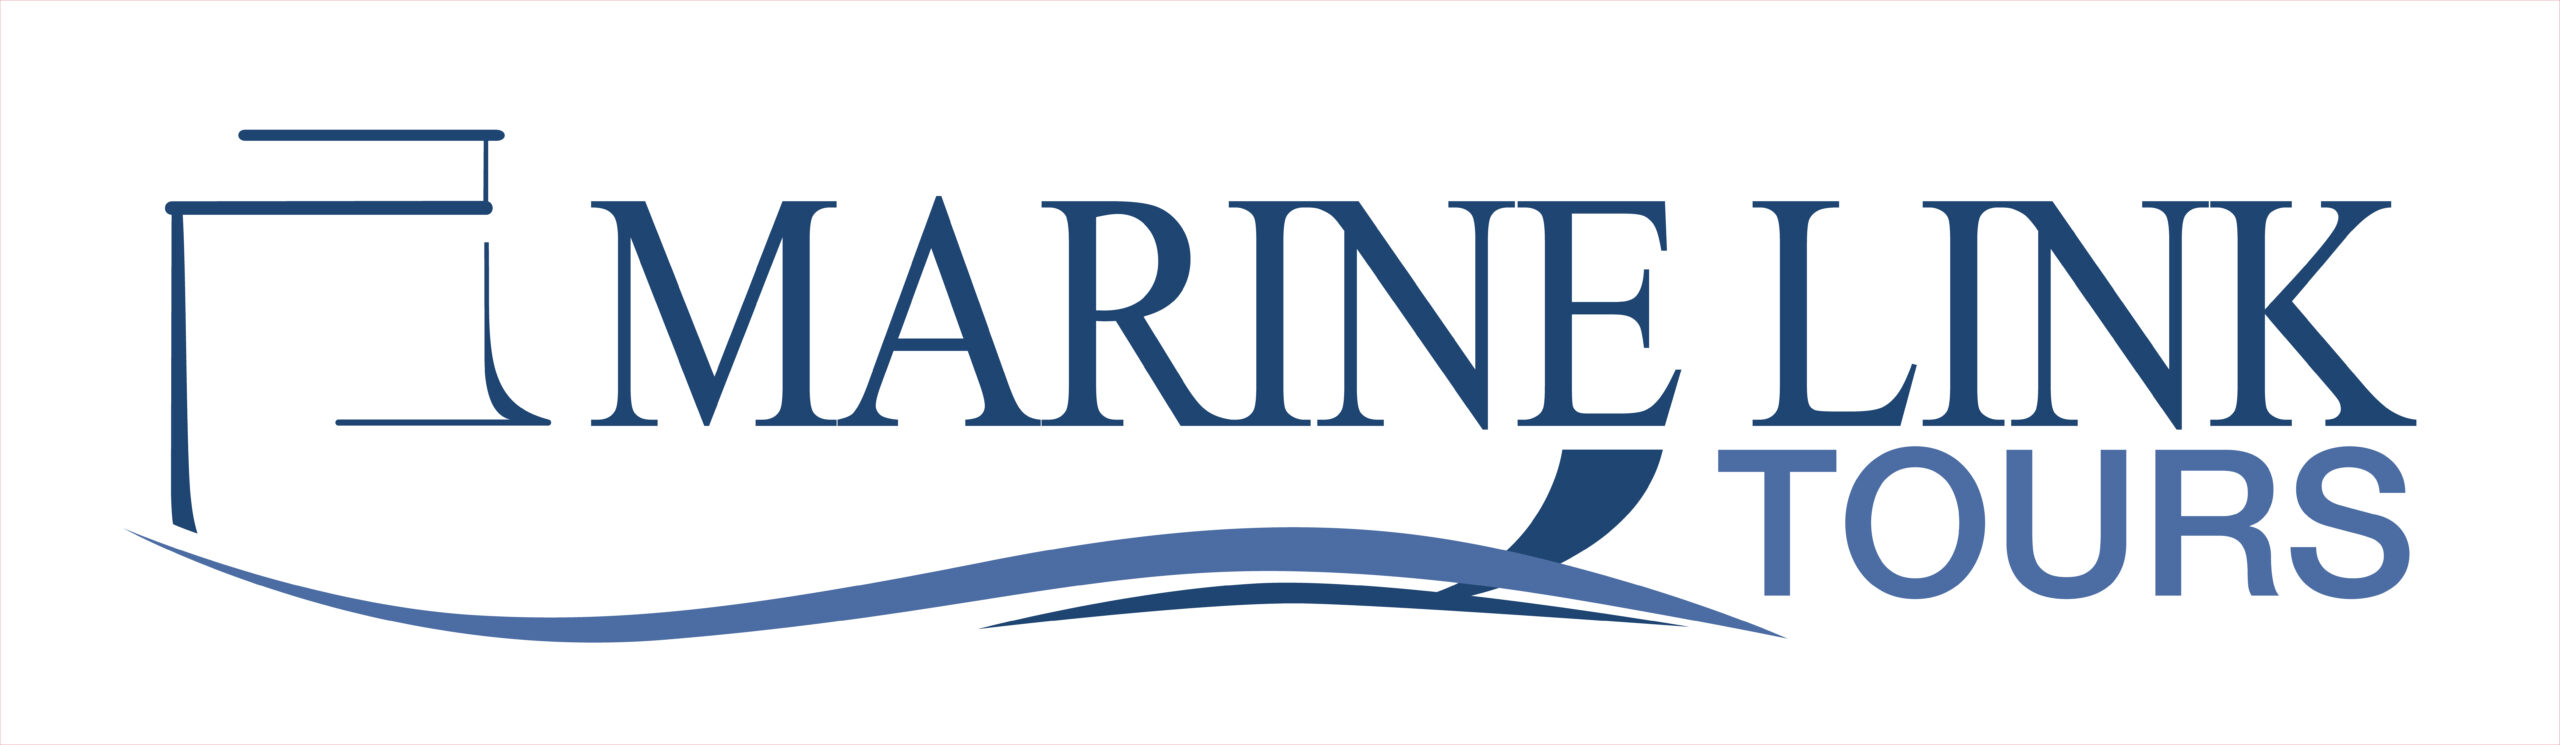 marine link tours rates